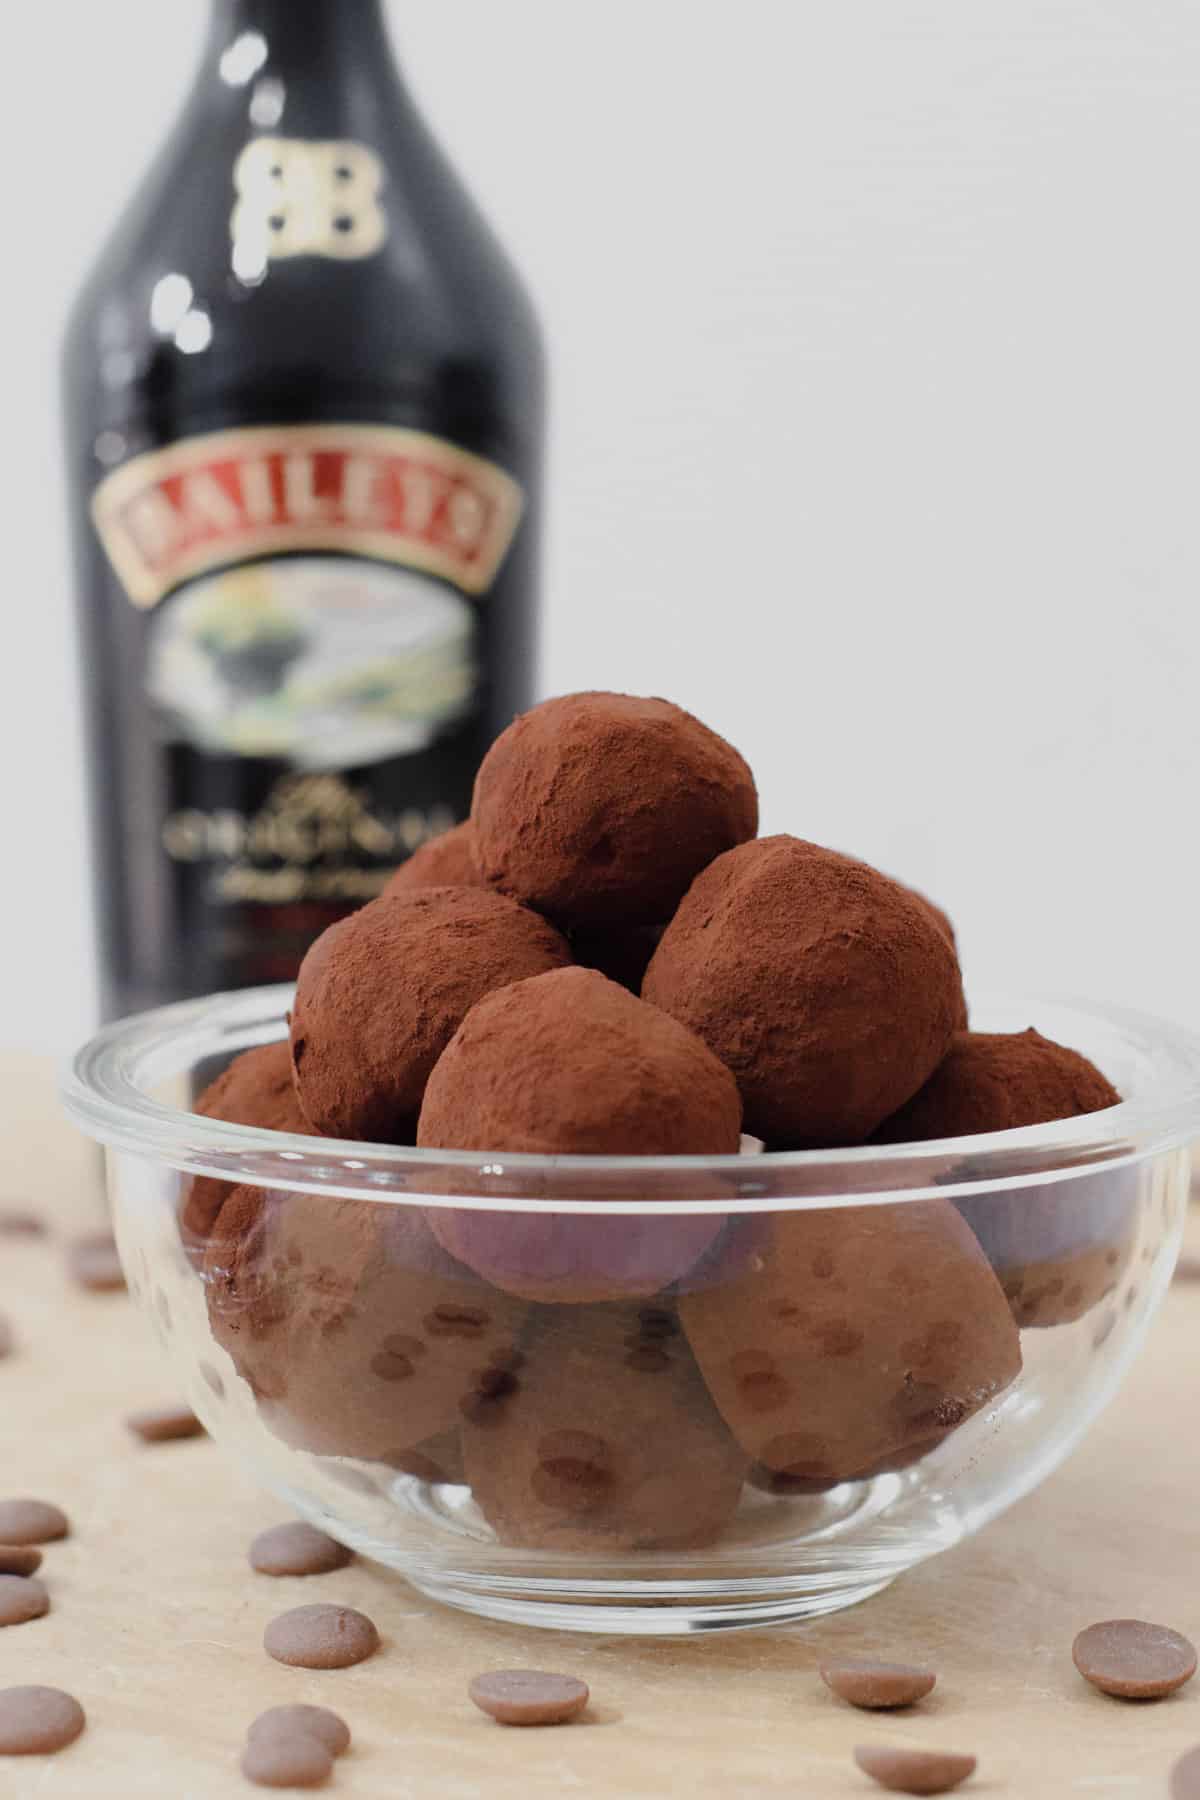 baileys irish cream chocolate truffle balls covered in cocoa powder in a bowl